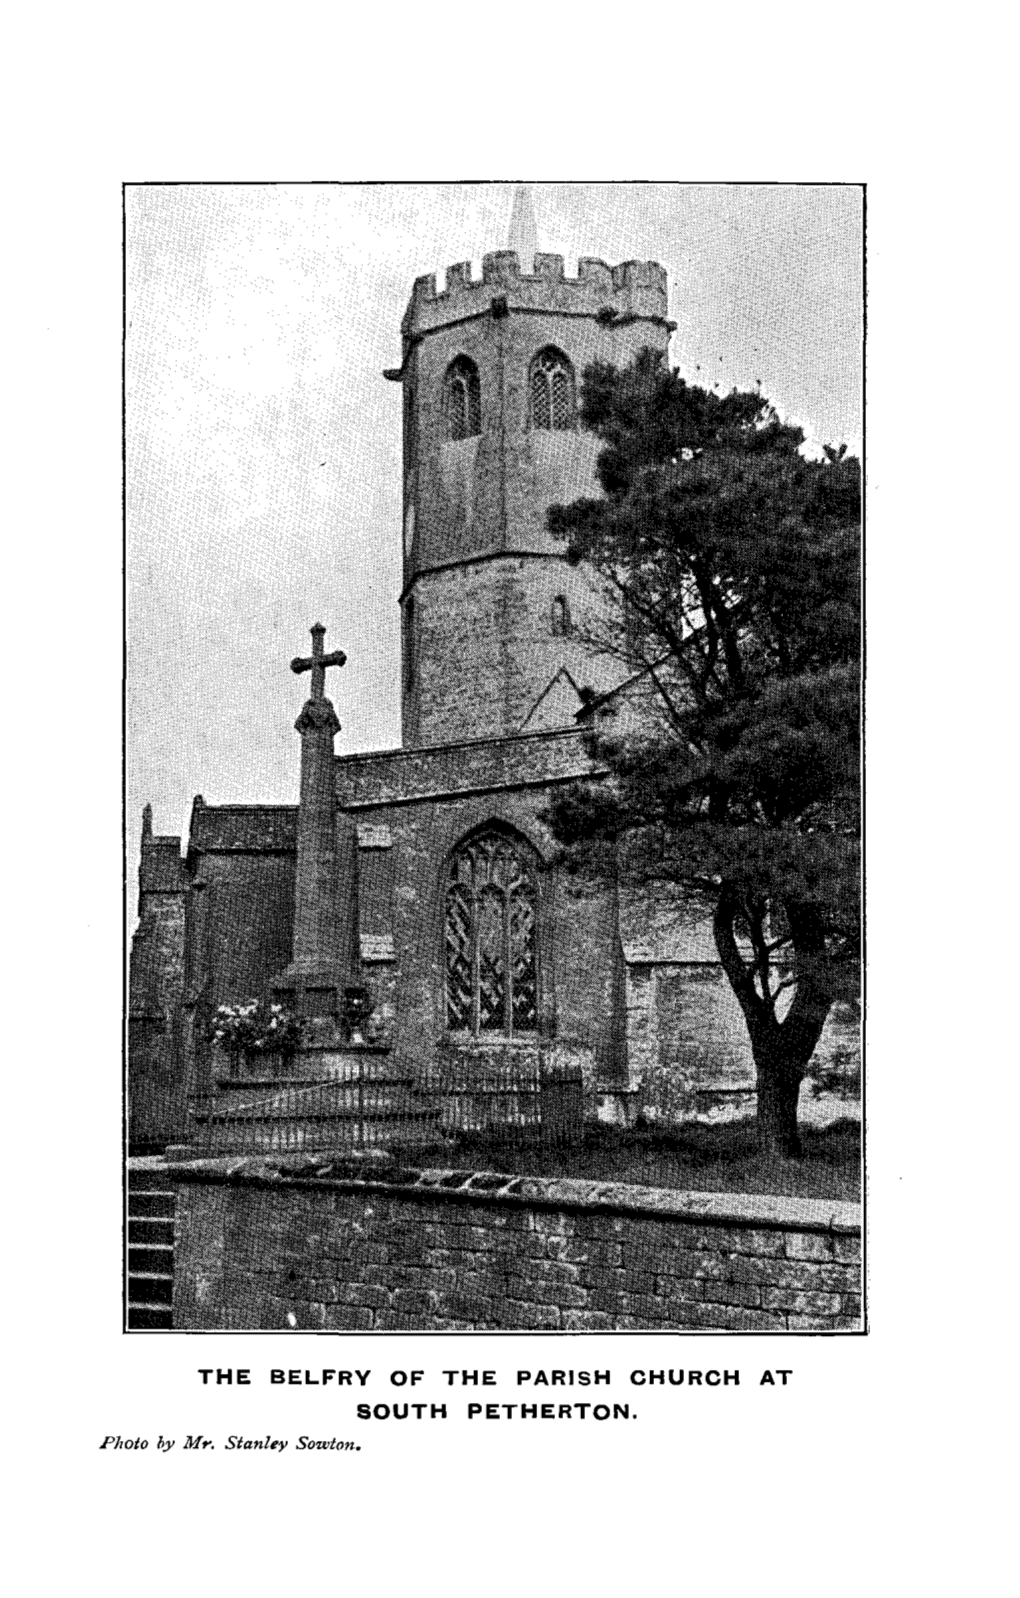 The Belfry of the Parish Church at South Petherton